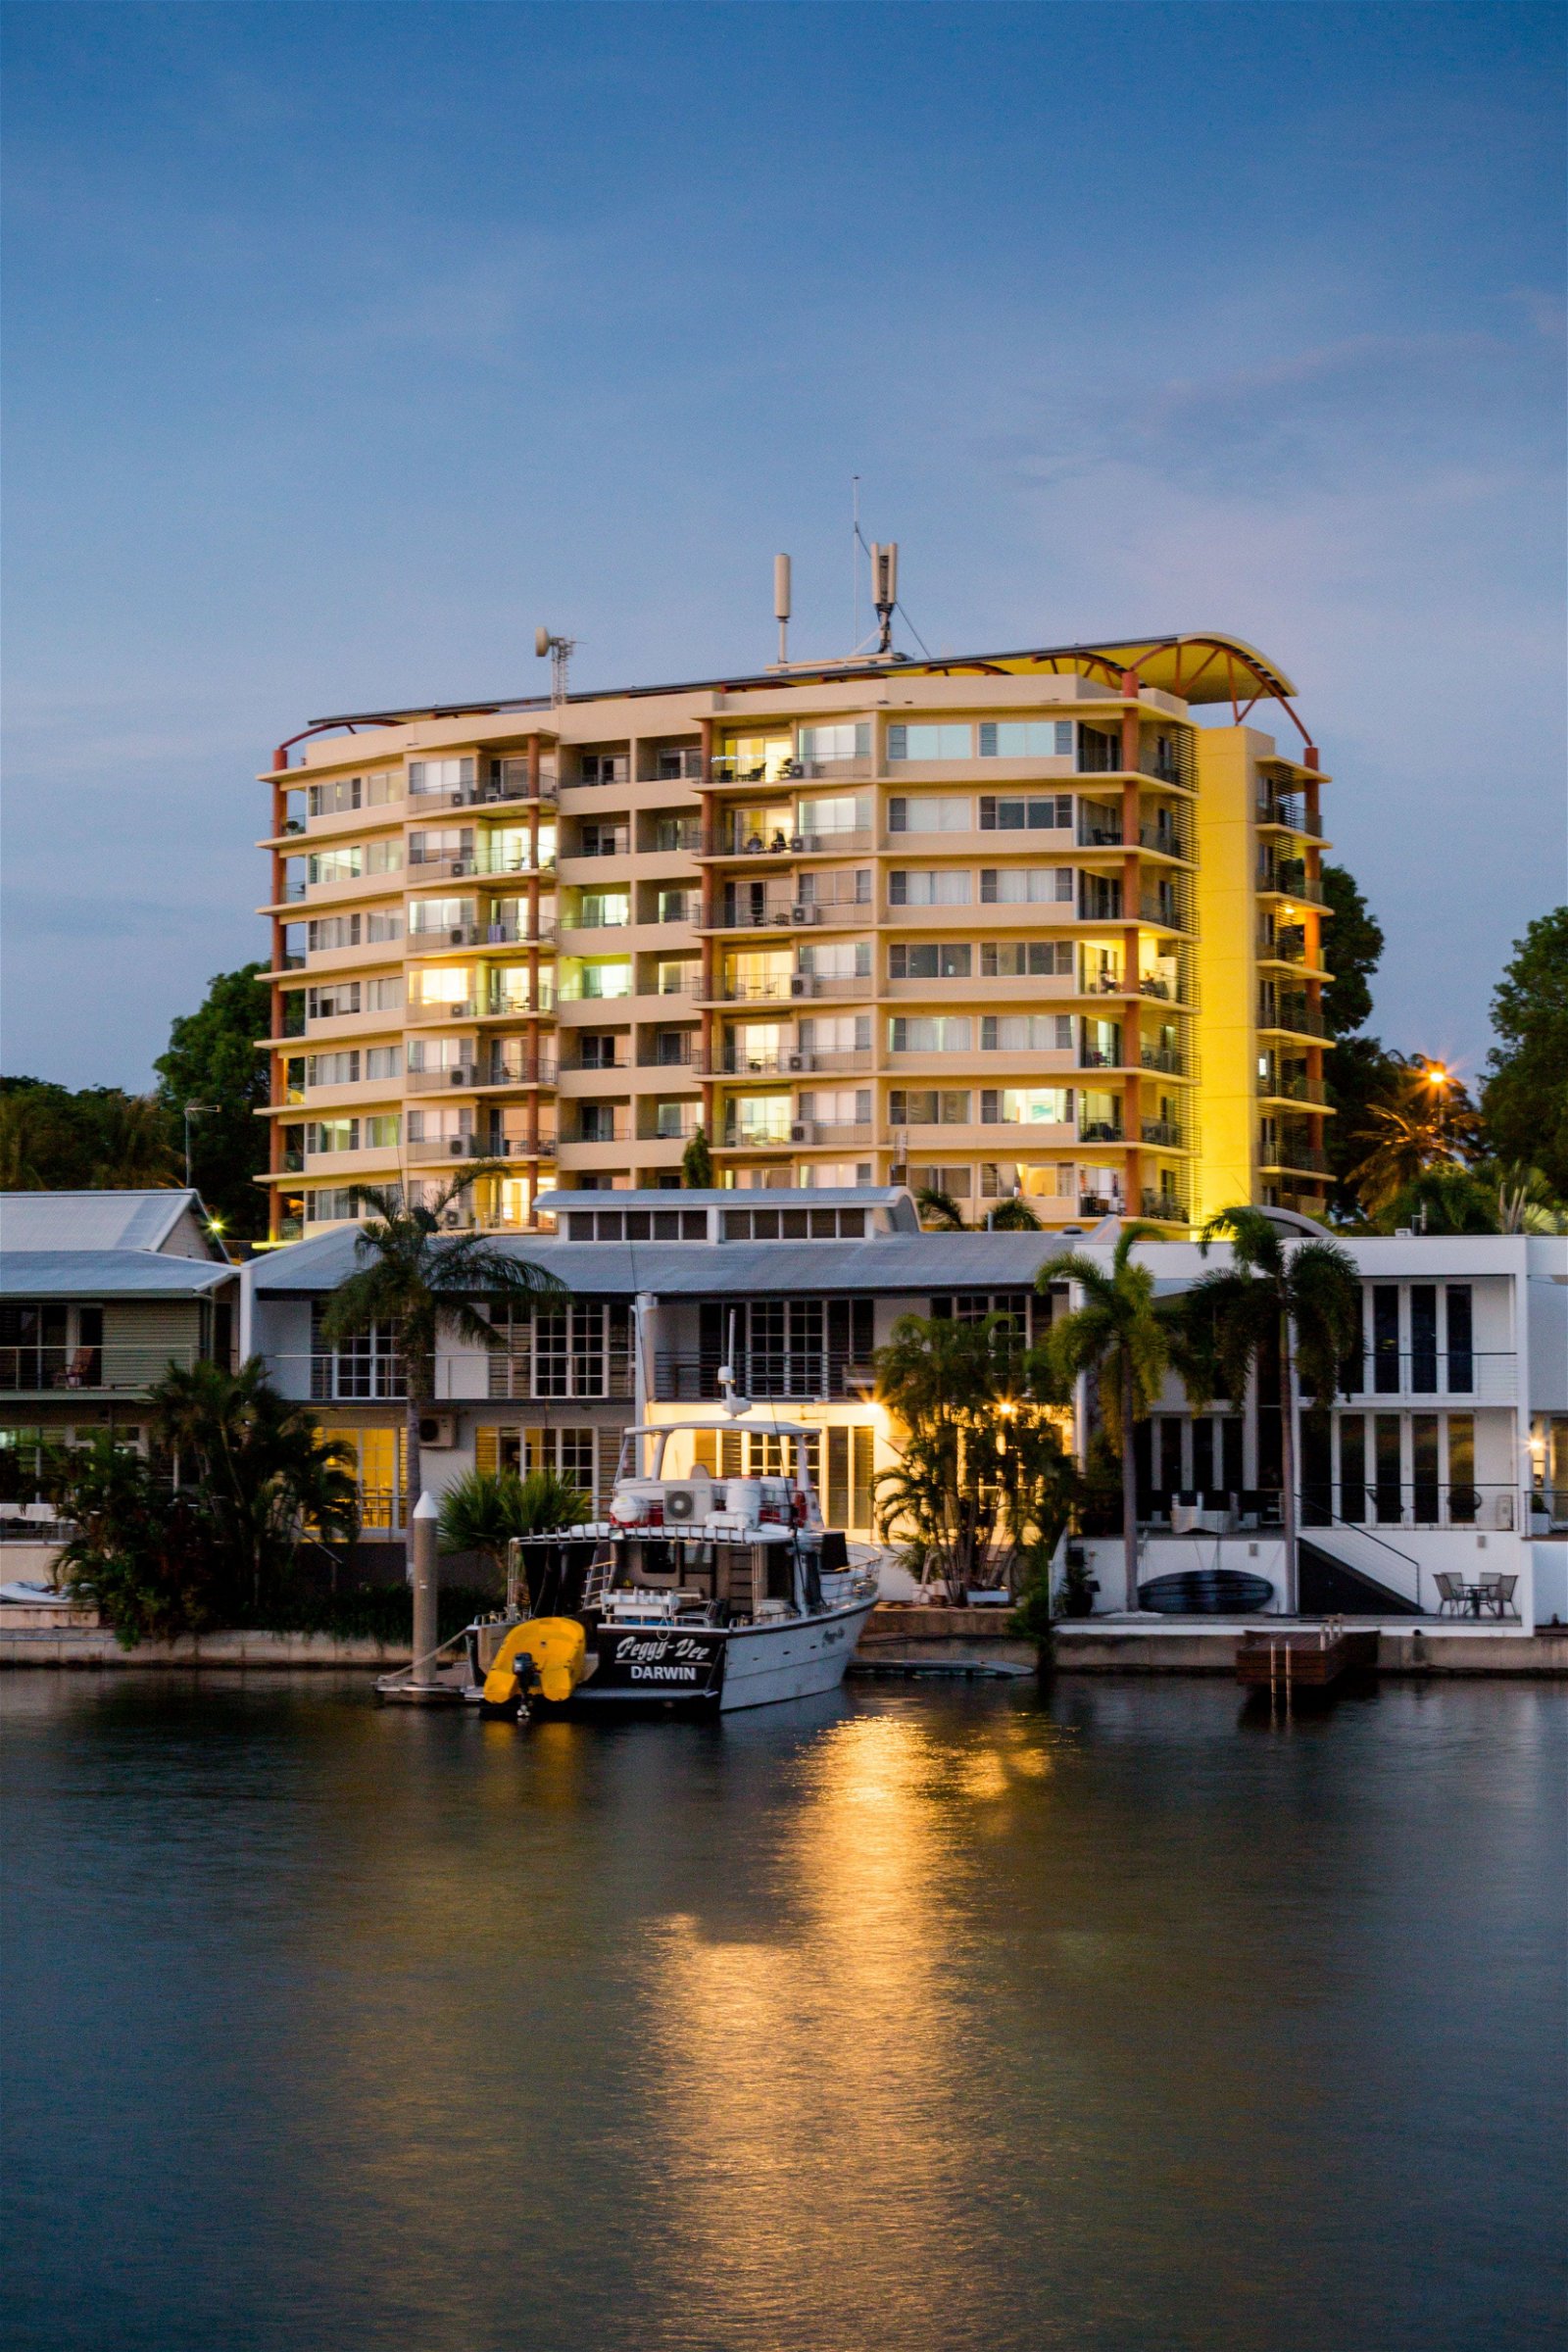 Cullen Bay Resorts